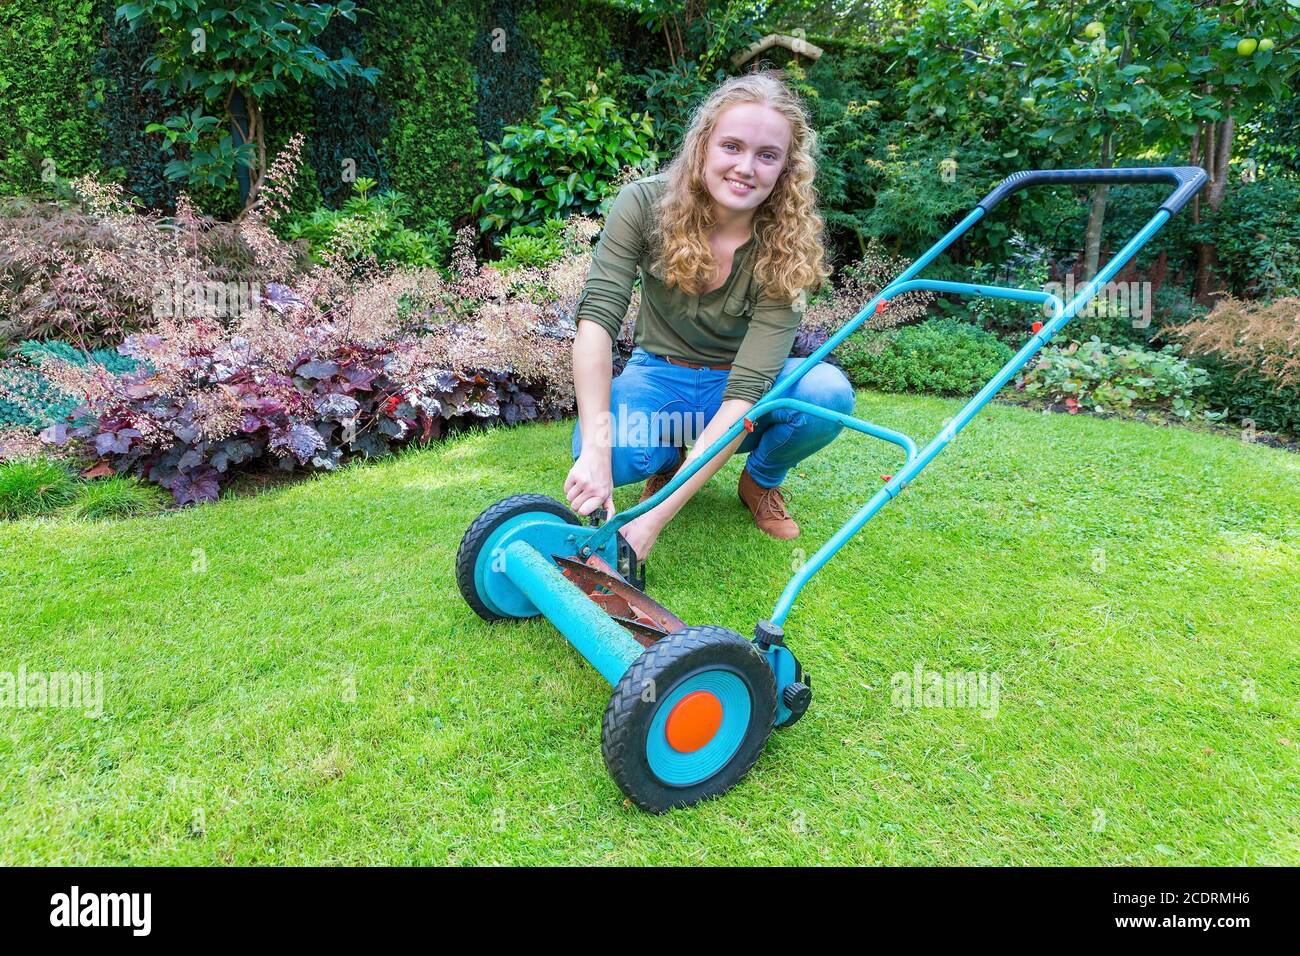 Young caucasian woman reparing lawn mower in garden Stock Photo